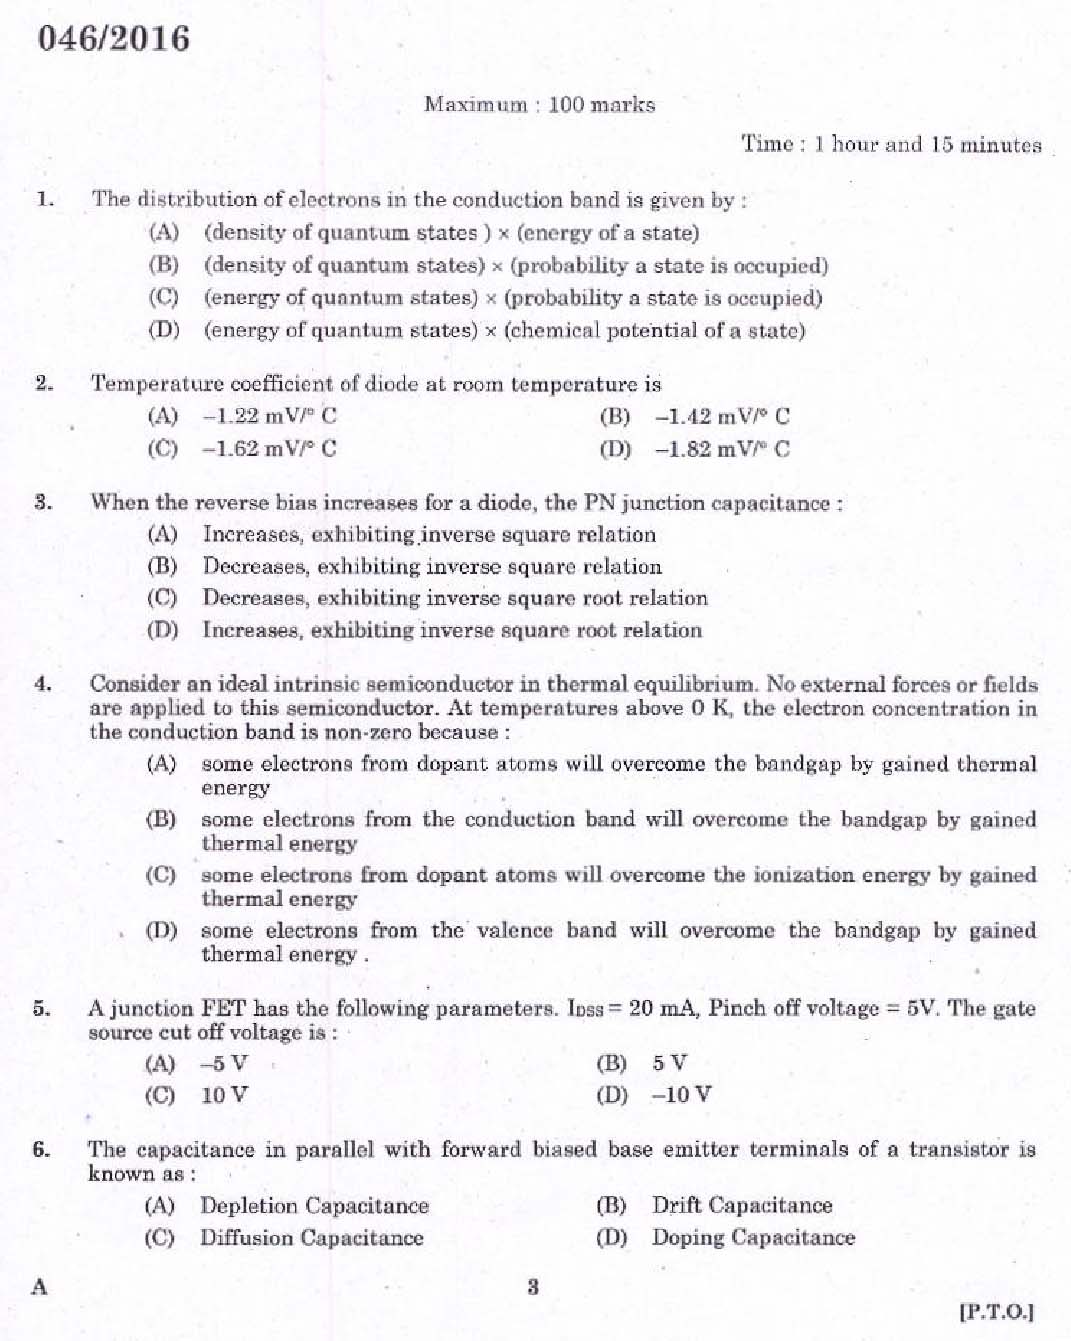 Kerala PSC Vocational Teacher Exam Question Code 462016 1